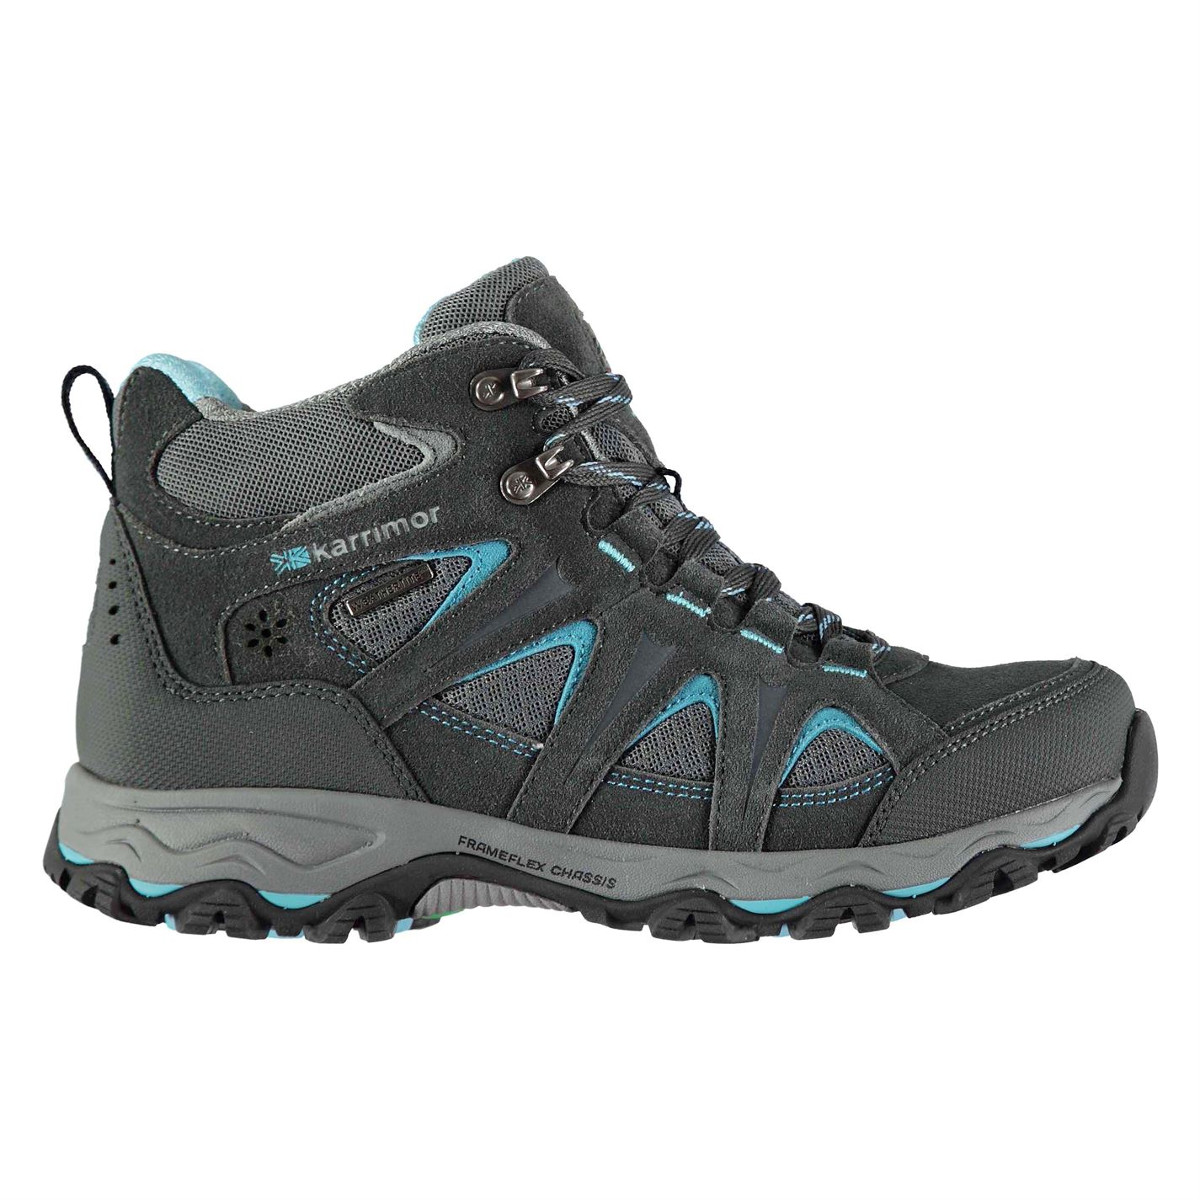 Karrimor Women's Mount Mid Waterproof Hiking Boots - Size 6